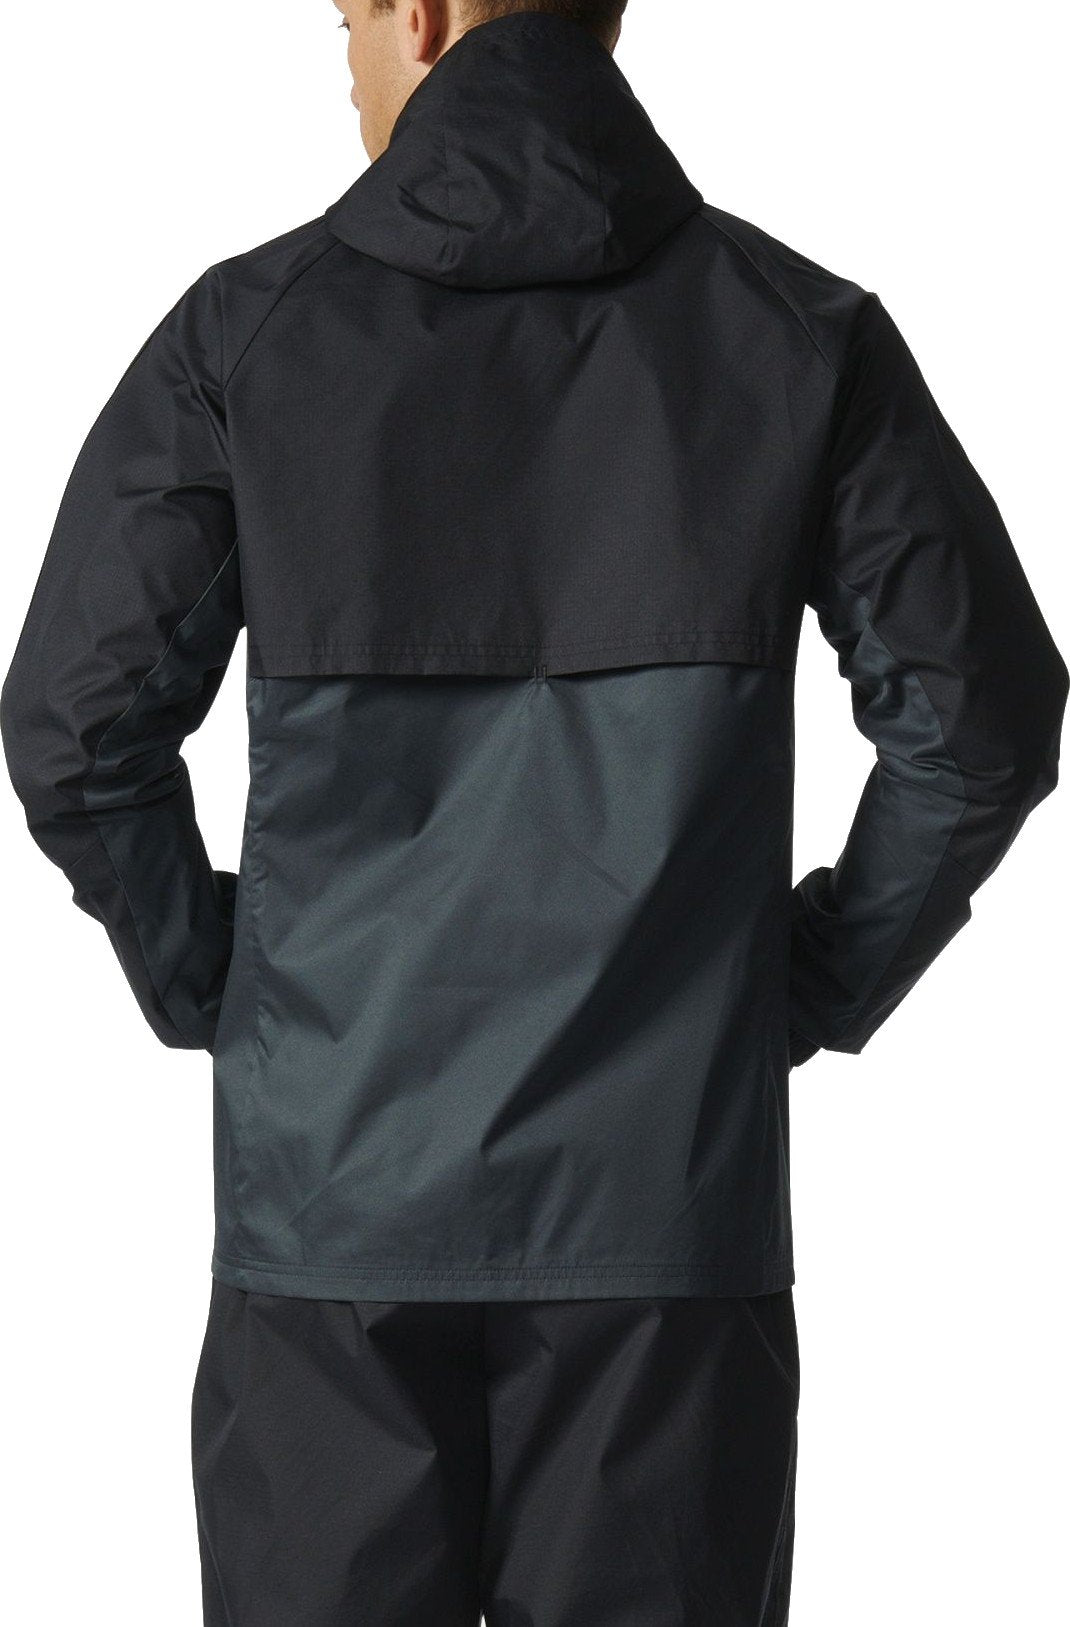 Adidas Tiro 17 Rain Jacket - Black/Grey AY2889 – Mann Outlet